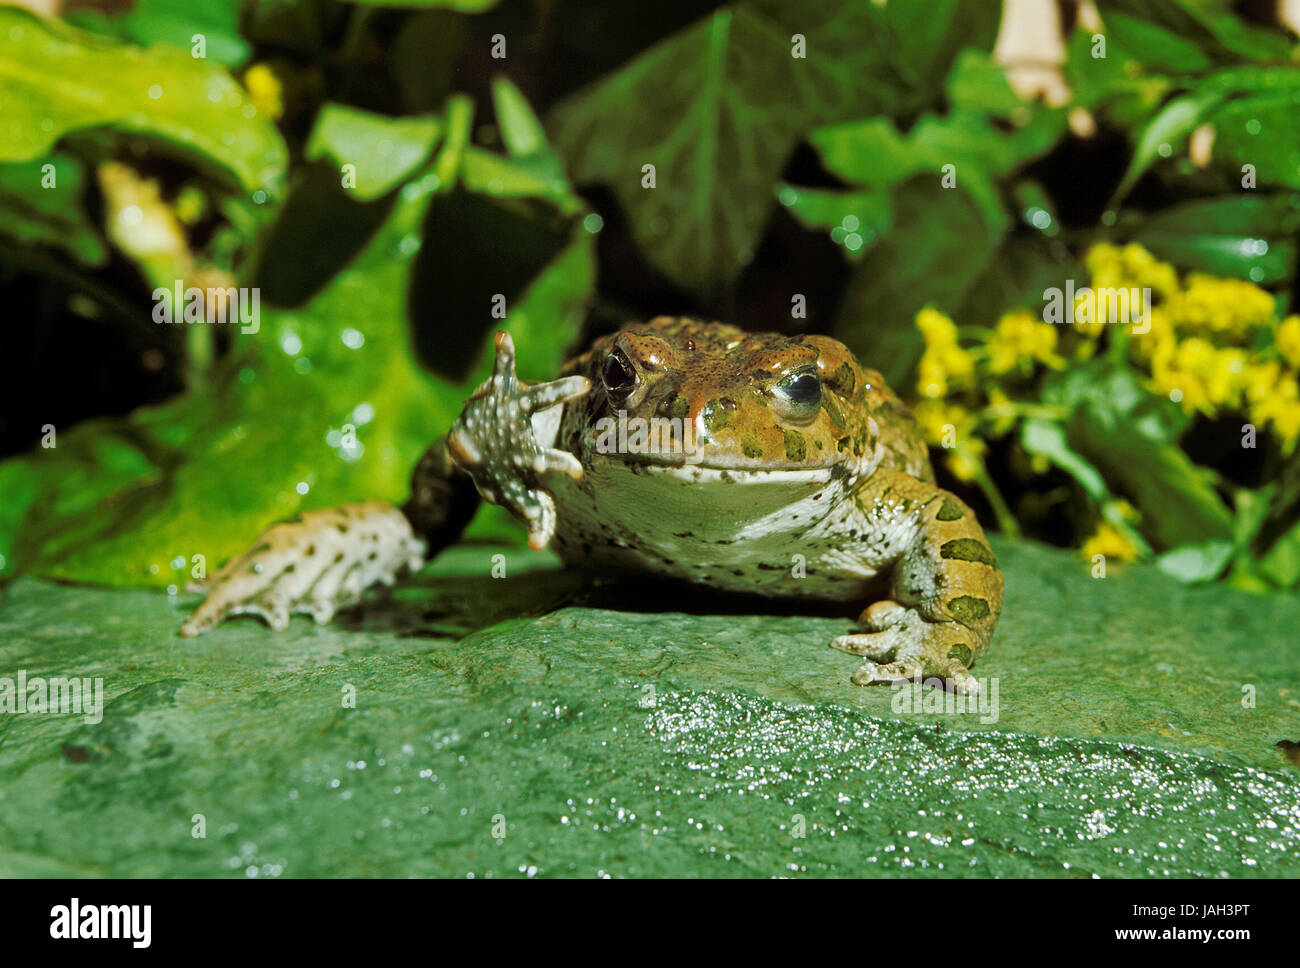 Change toad or green toad,Bufo viridis,adult animal, Stock Photo